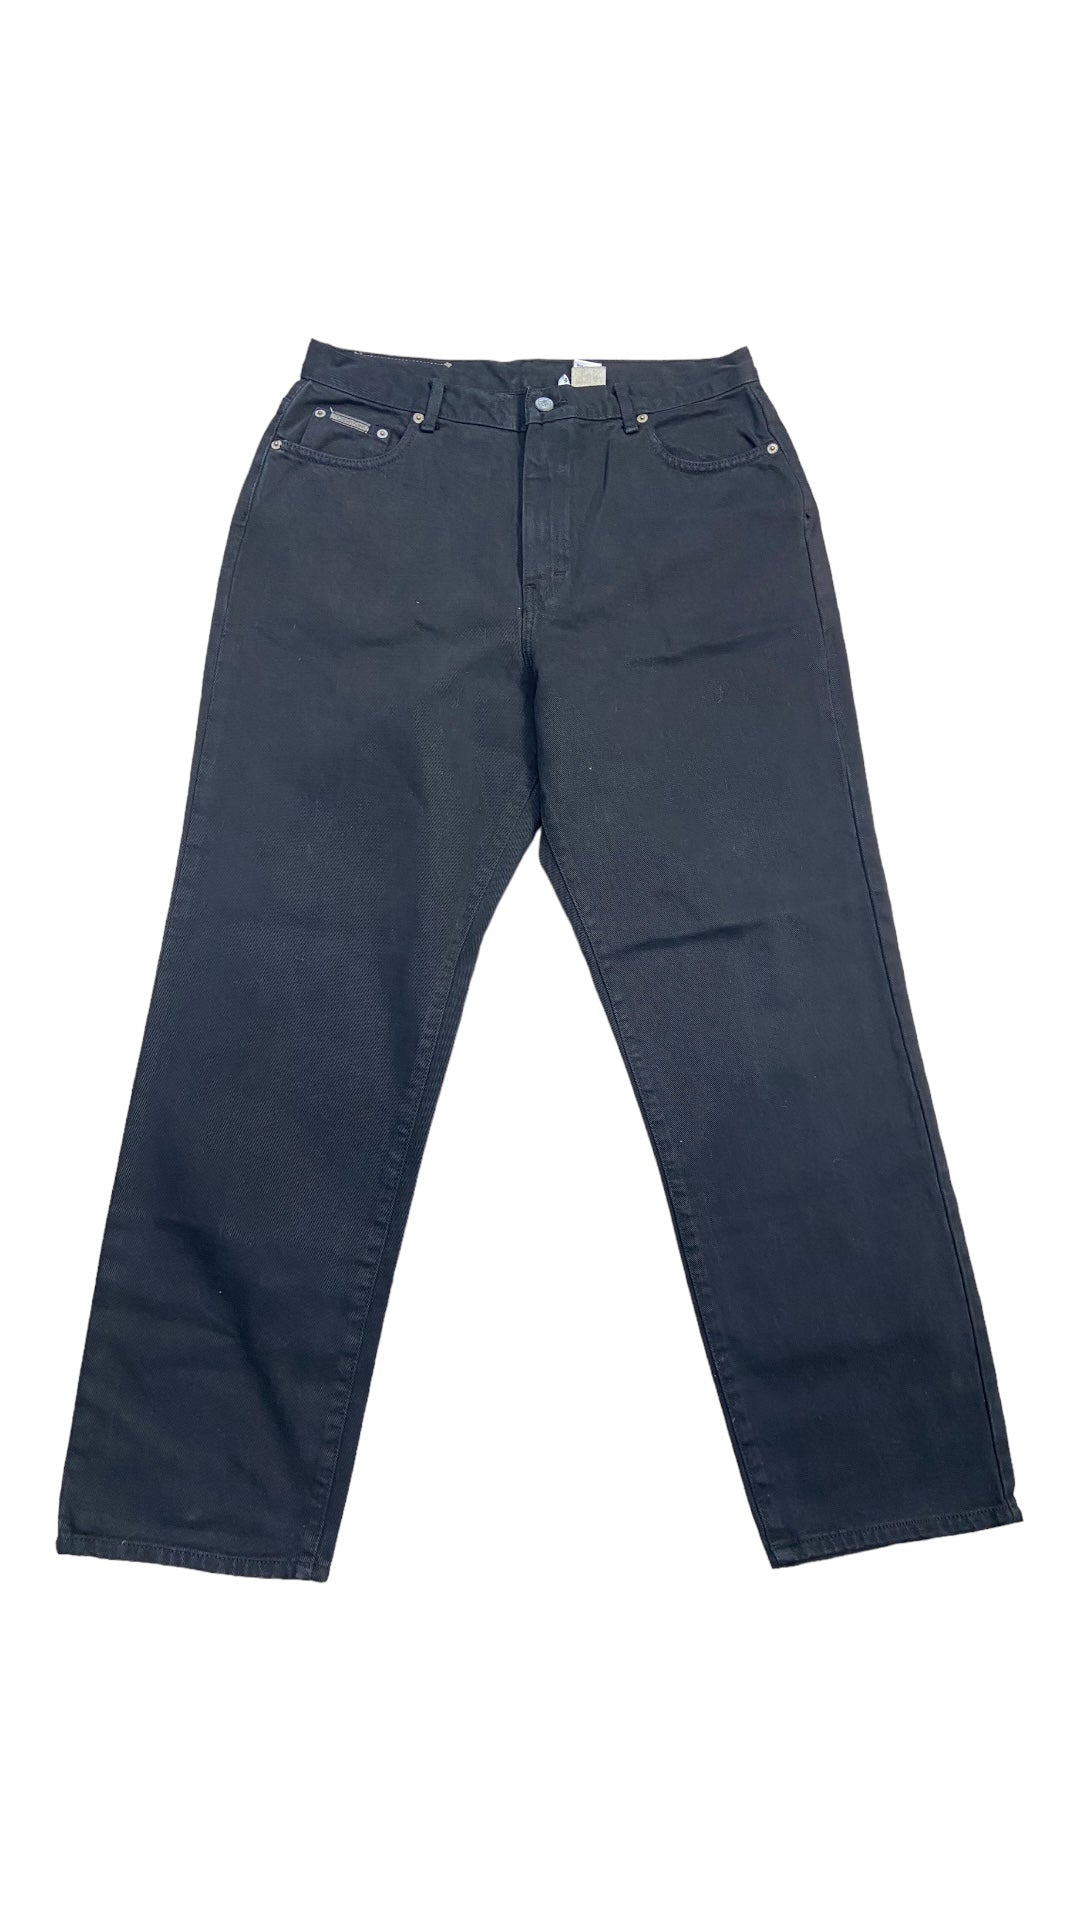 VTG Calvin Klein Easy Fit Black Jeans Sz 34x30